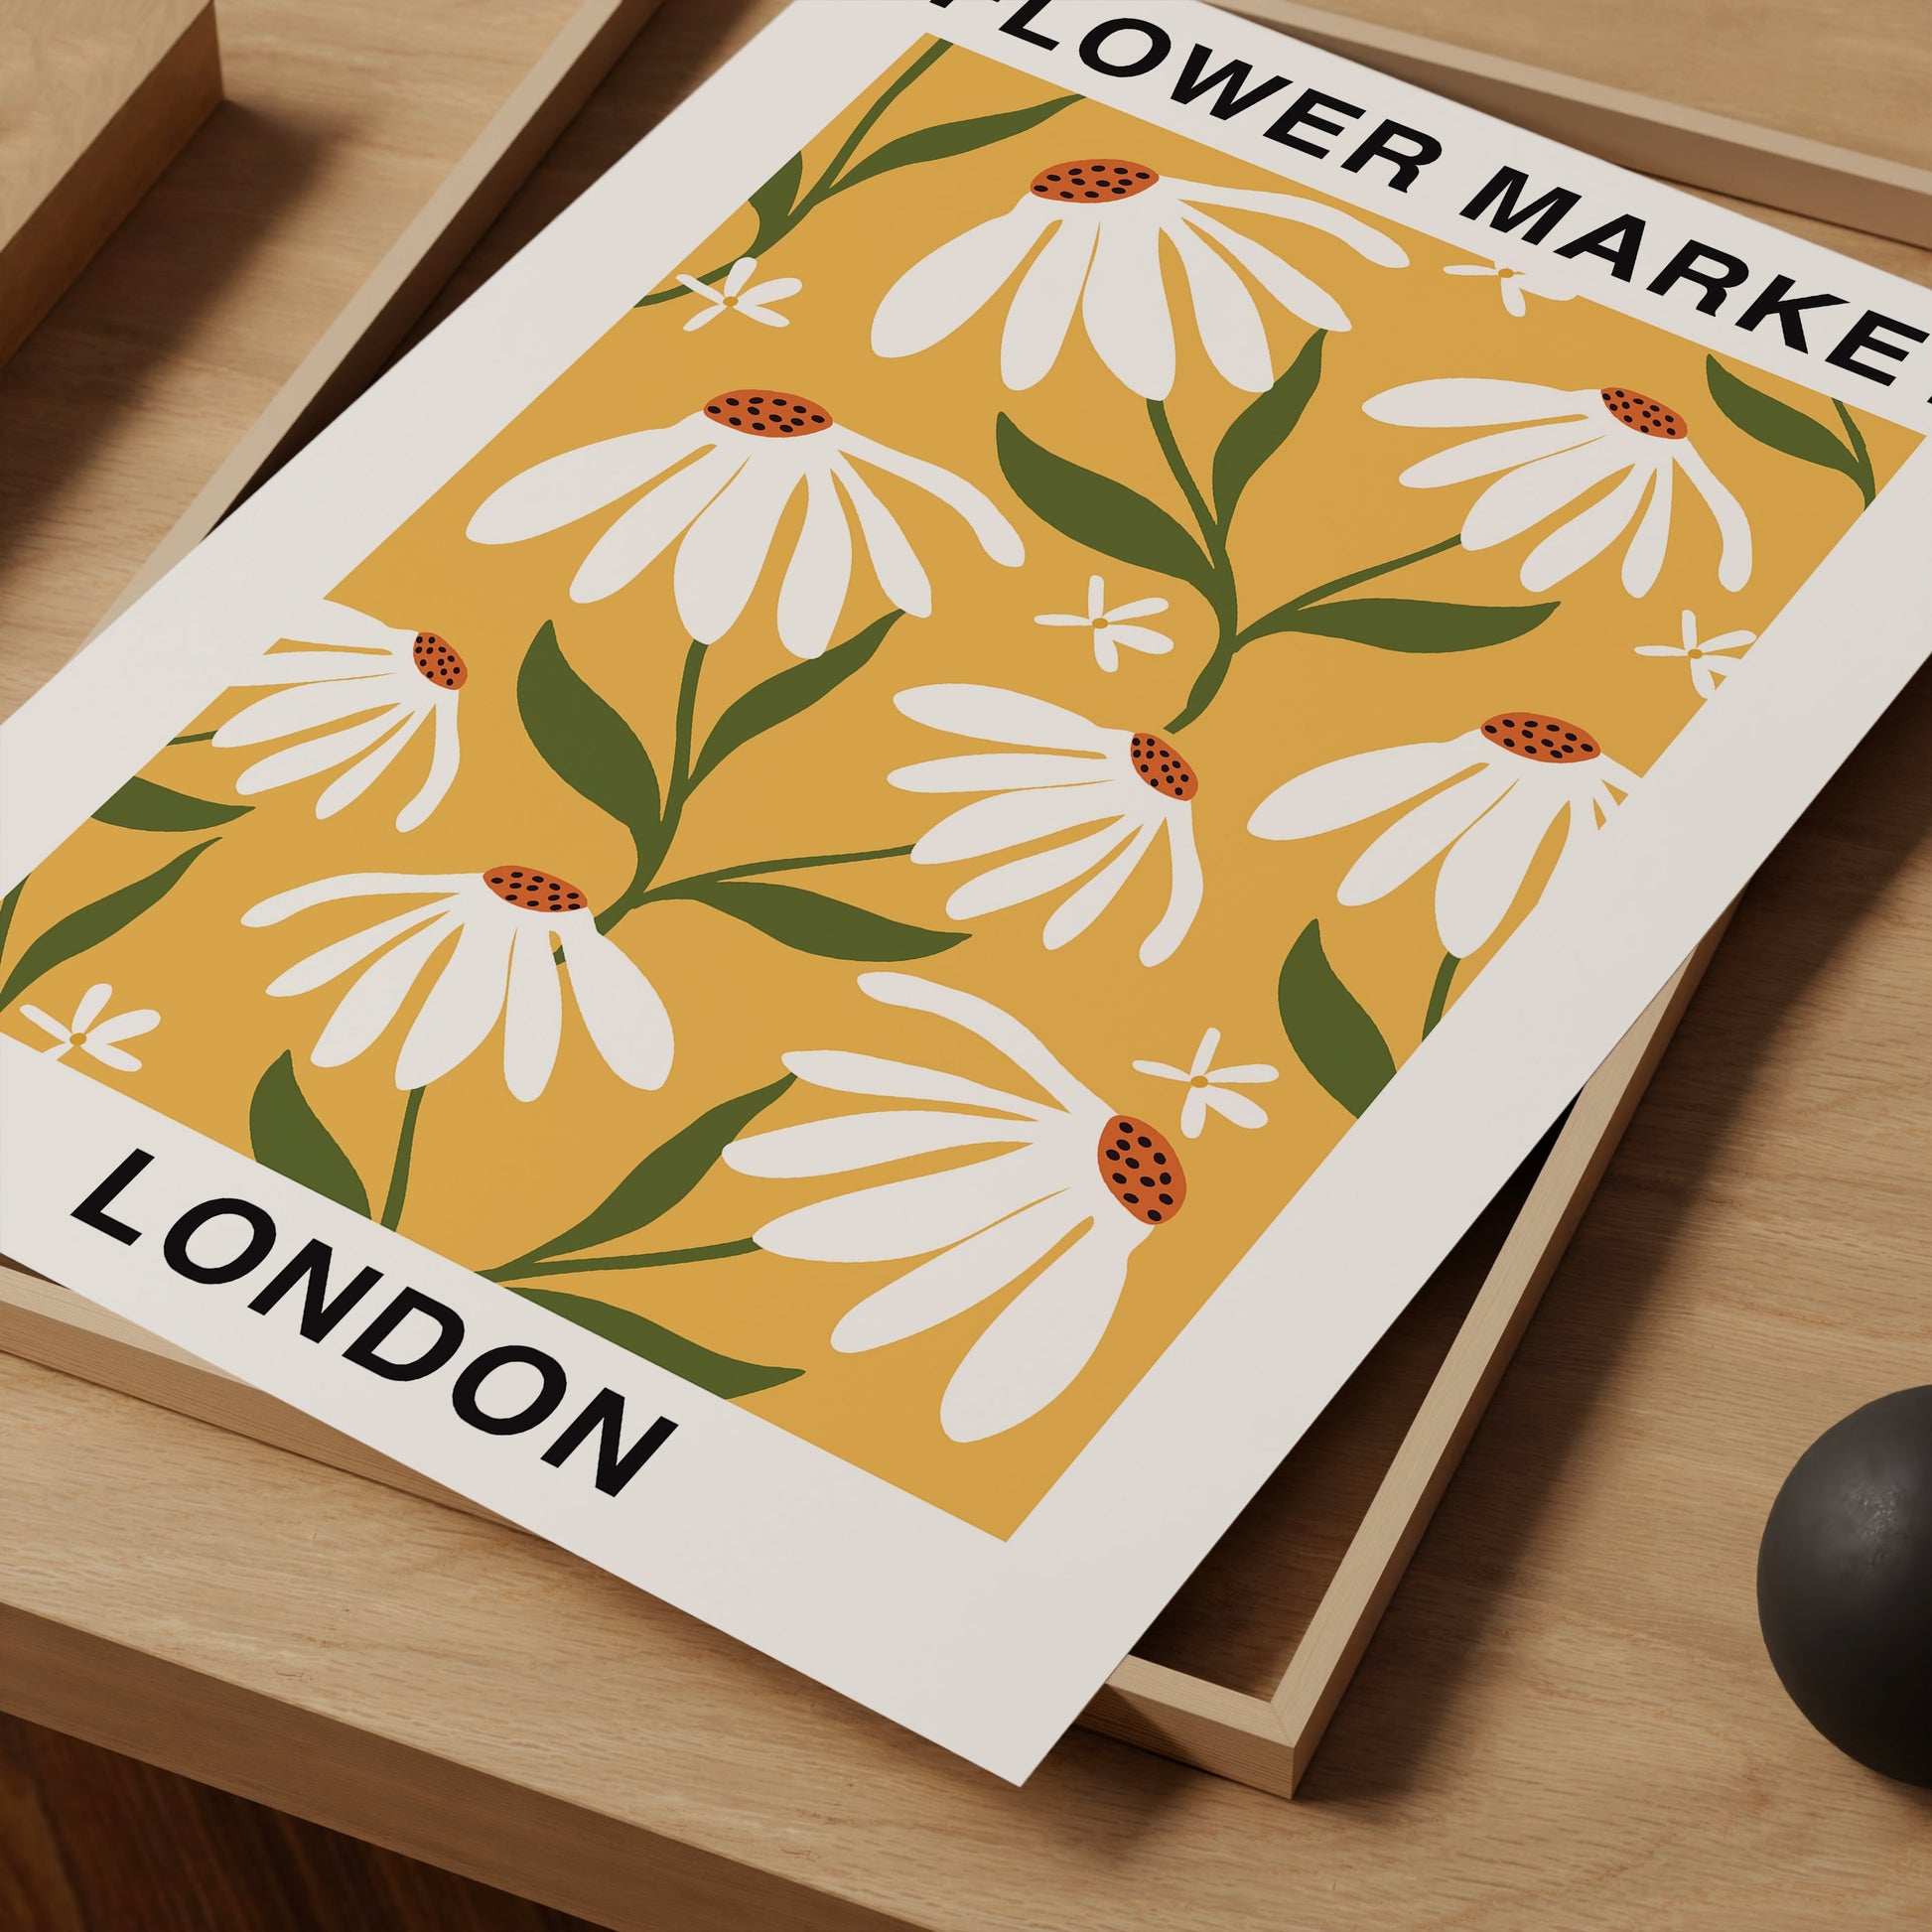 a flower make london poster sitting on a desk